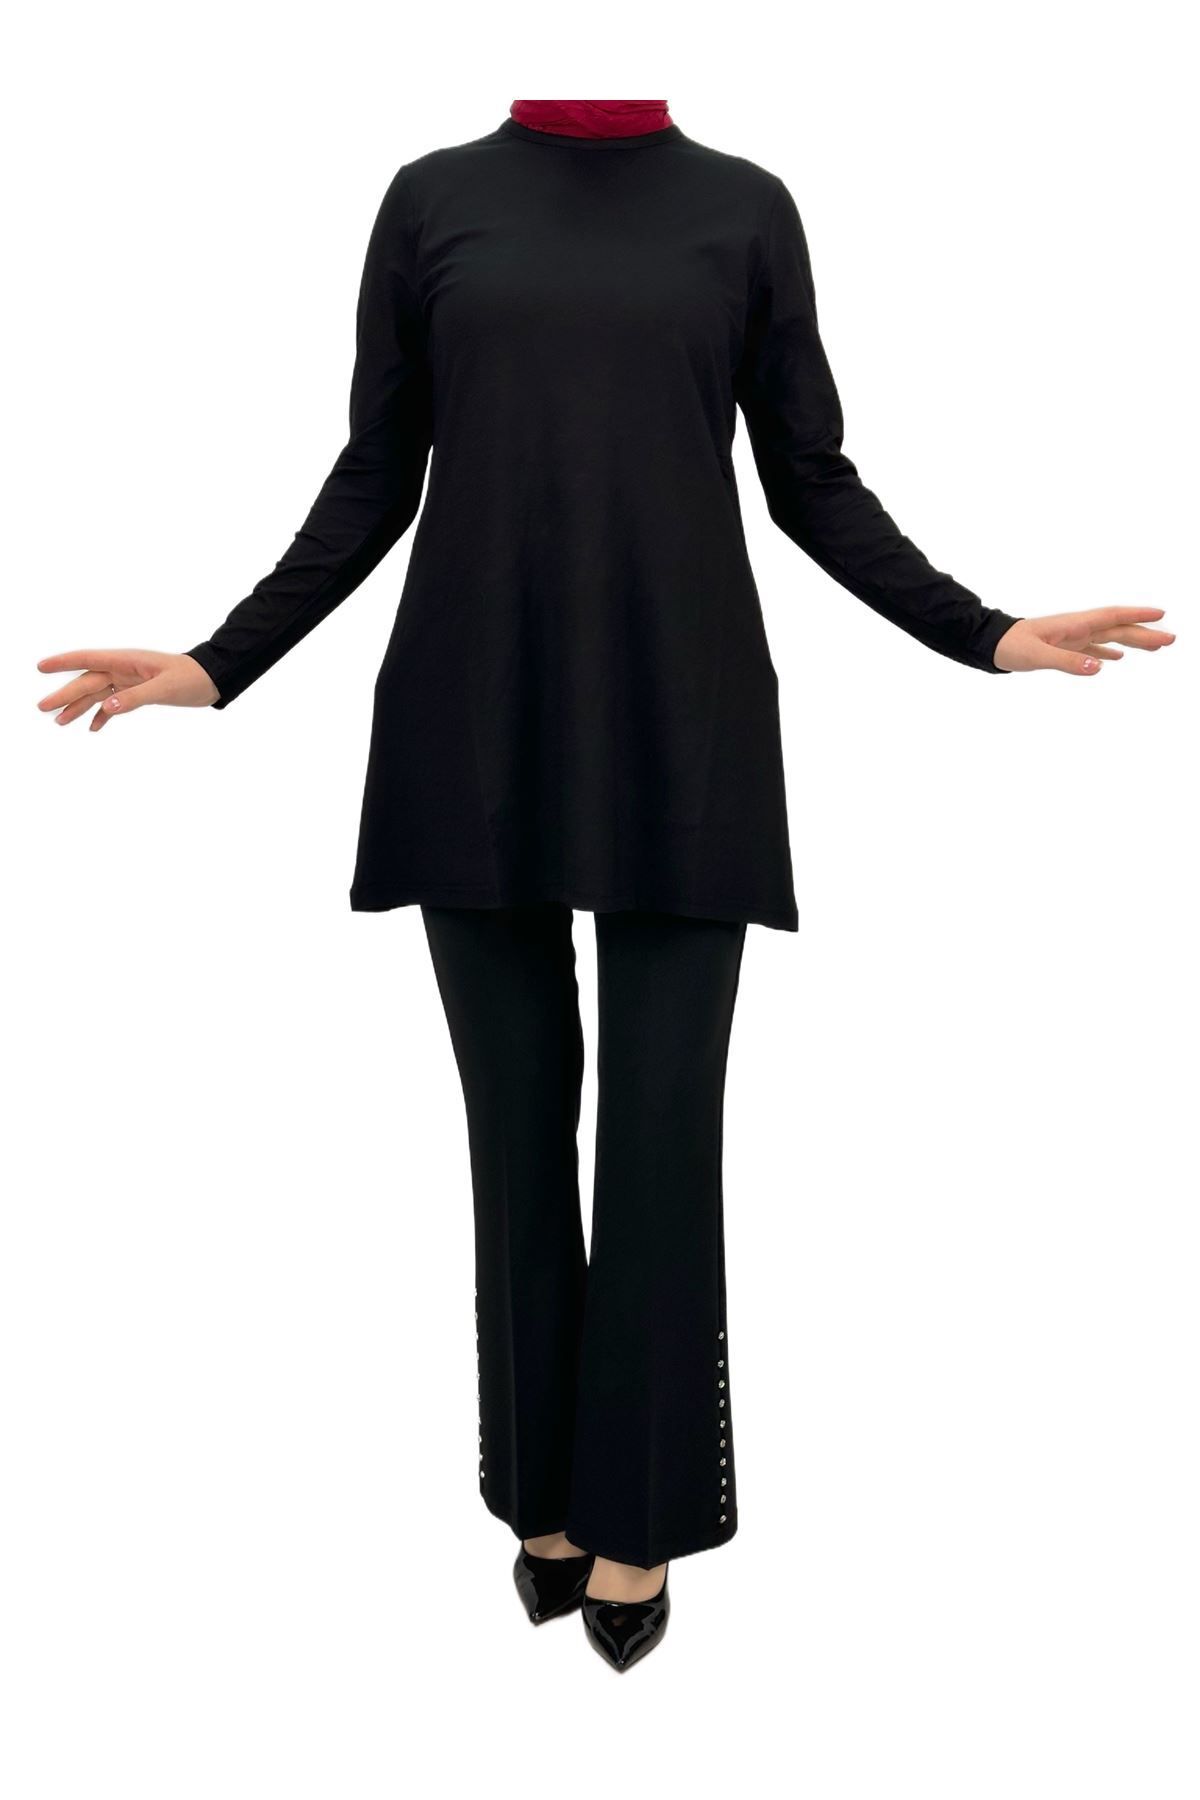 ottoman wear OTW408 Uzun Kollu Penye İçlik Siyah